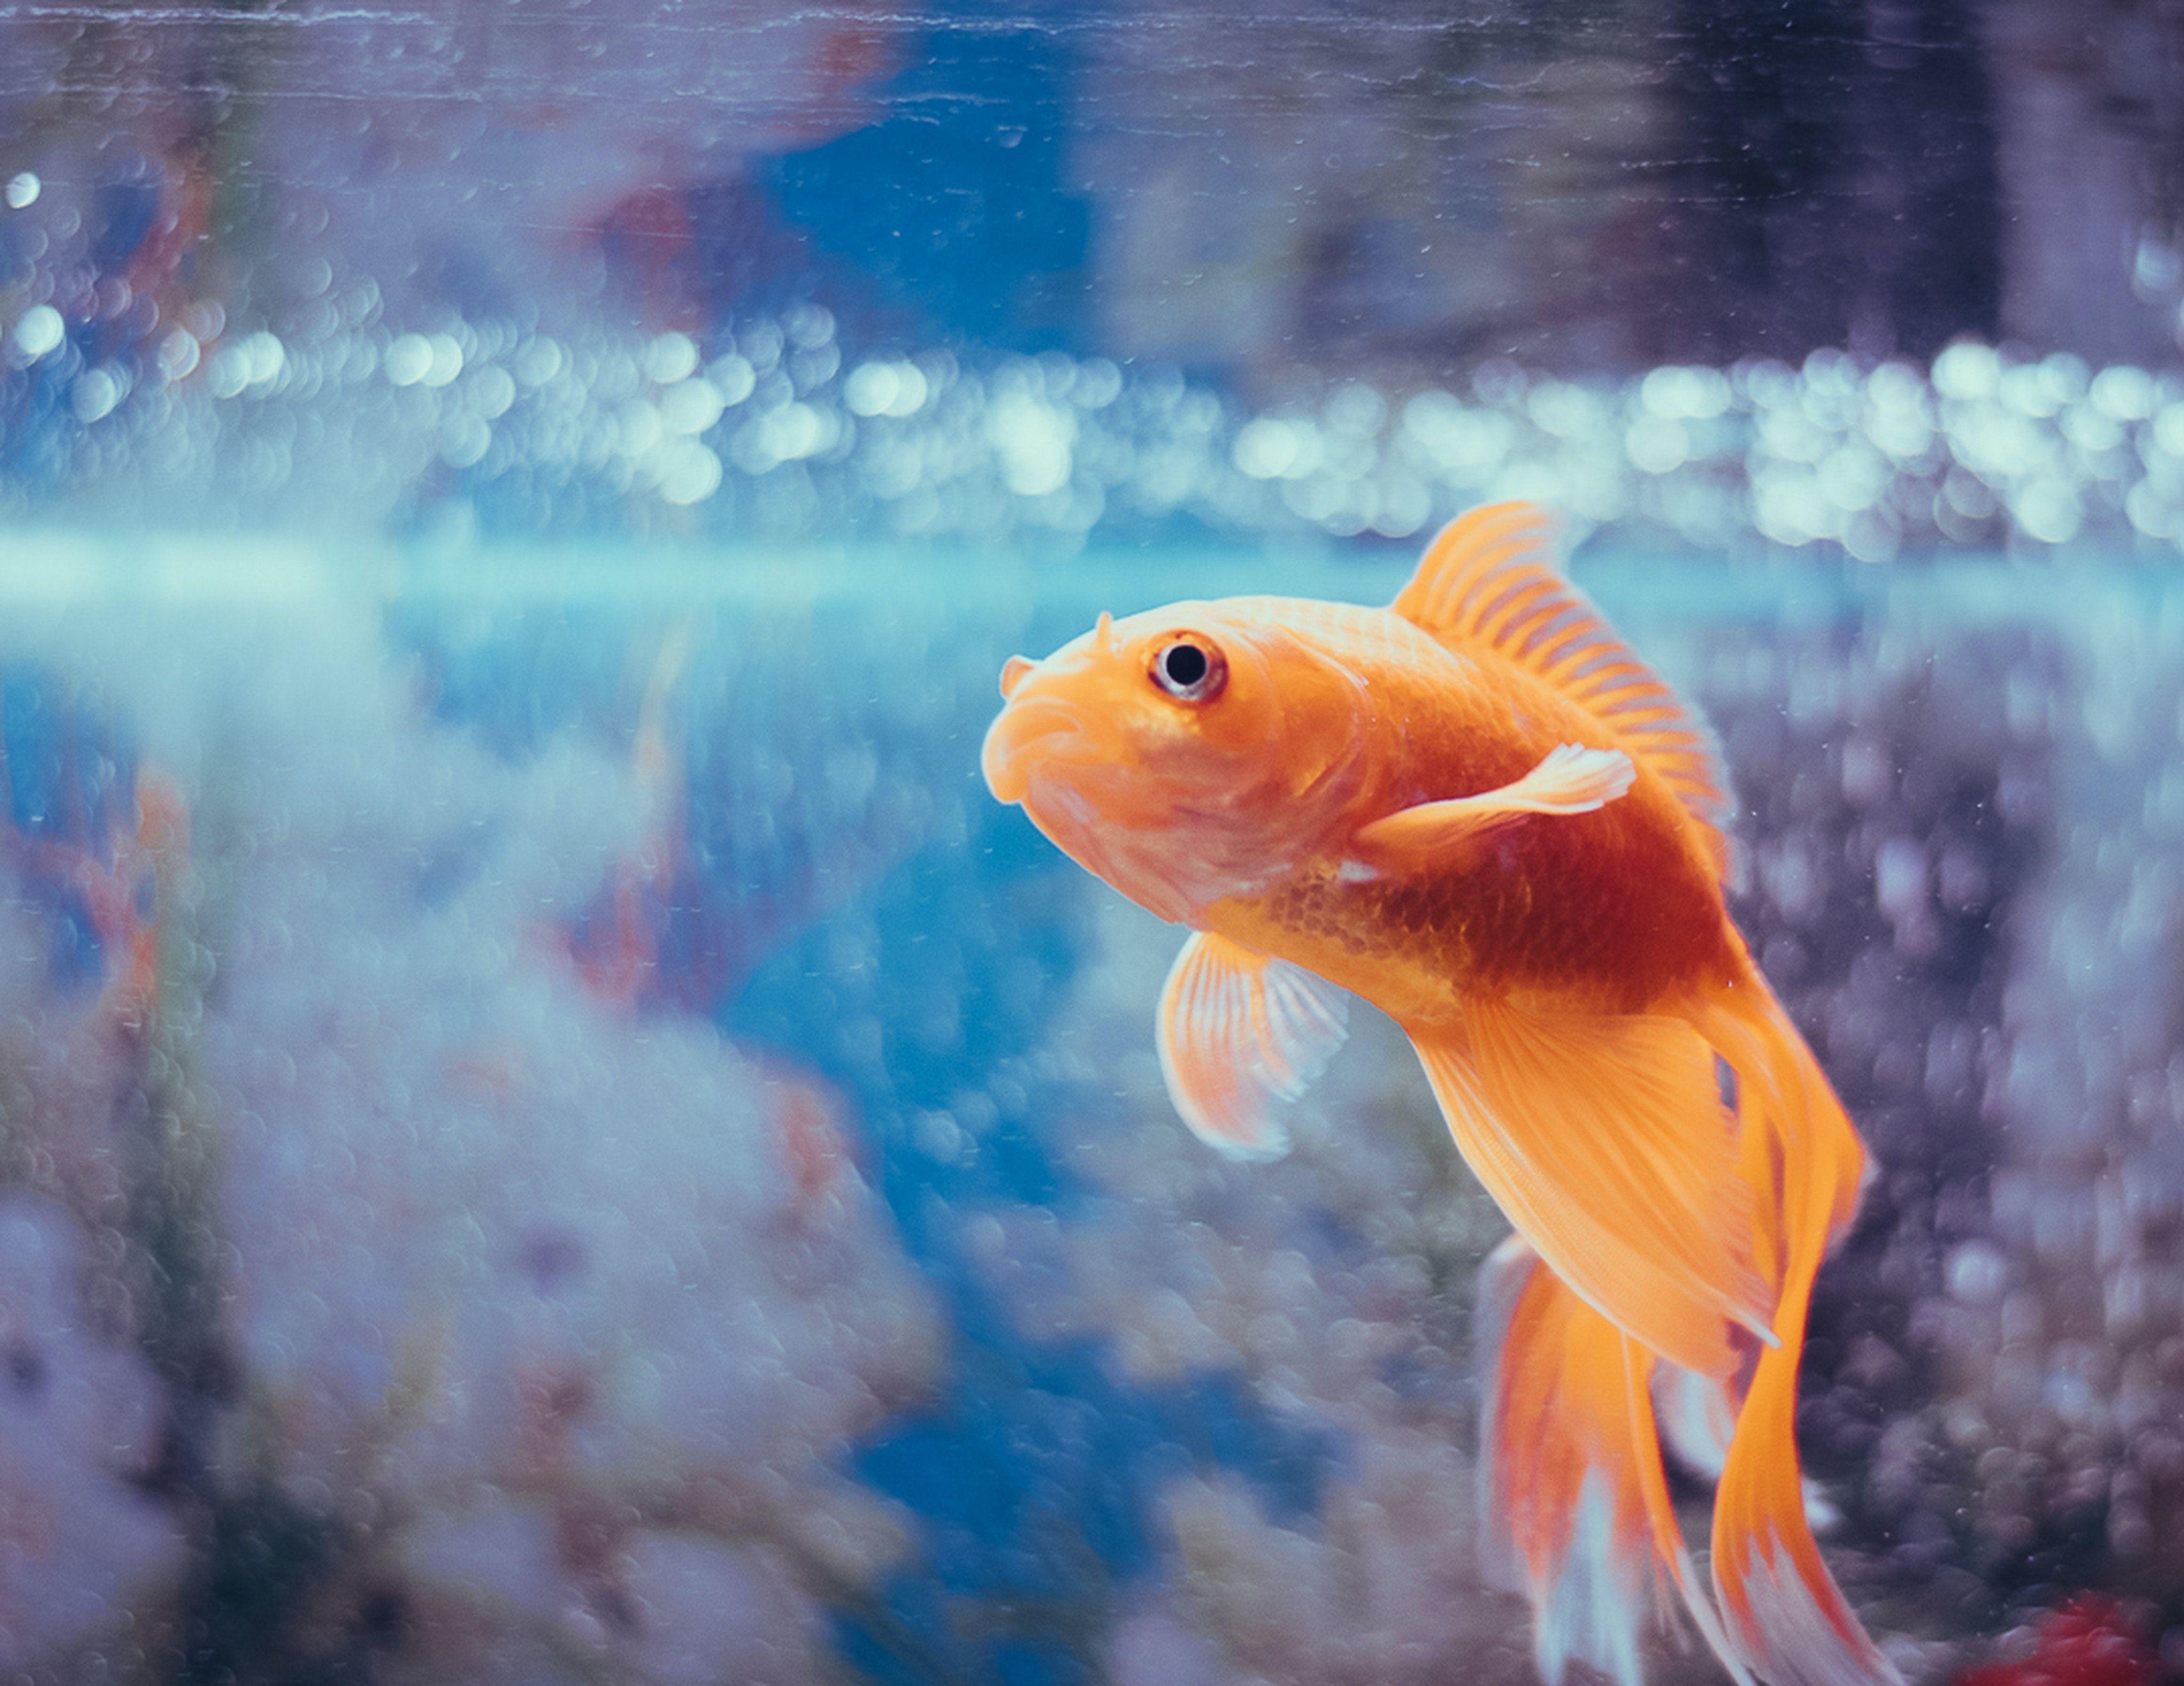 A gold fish